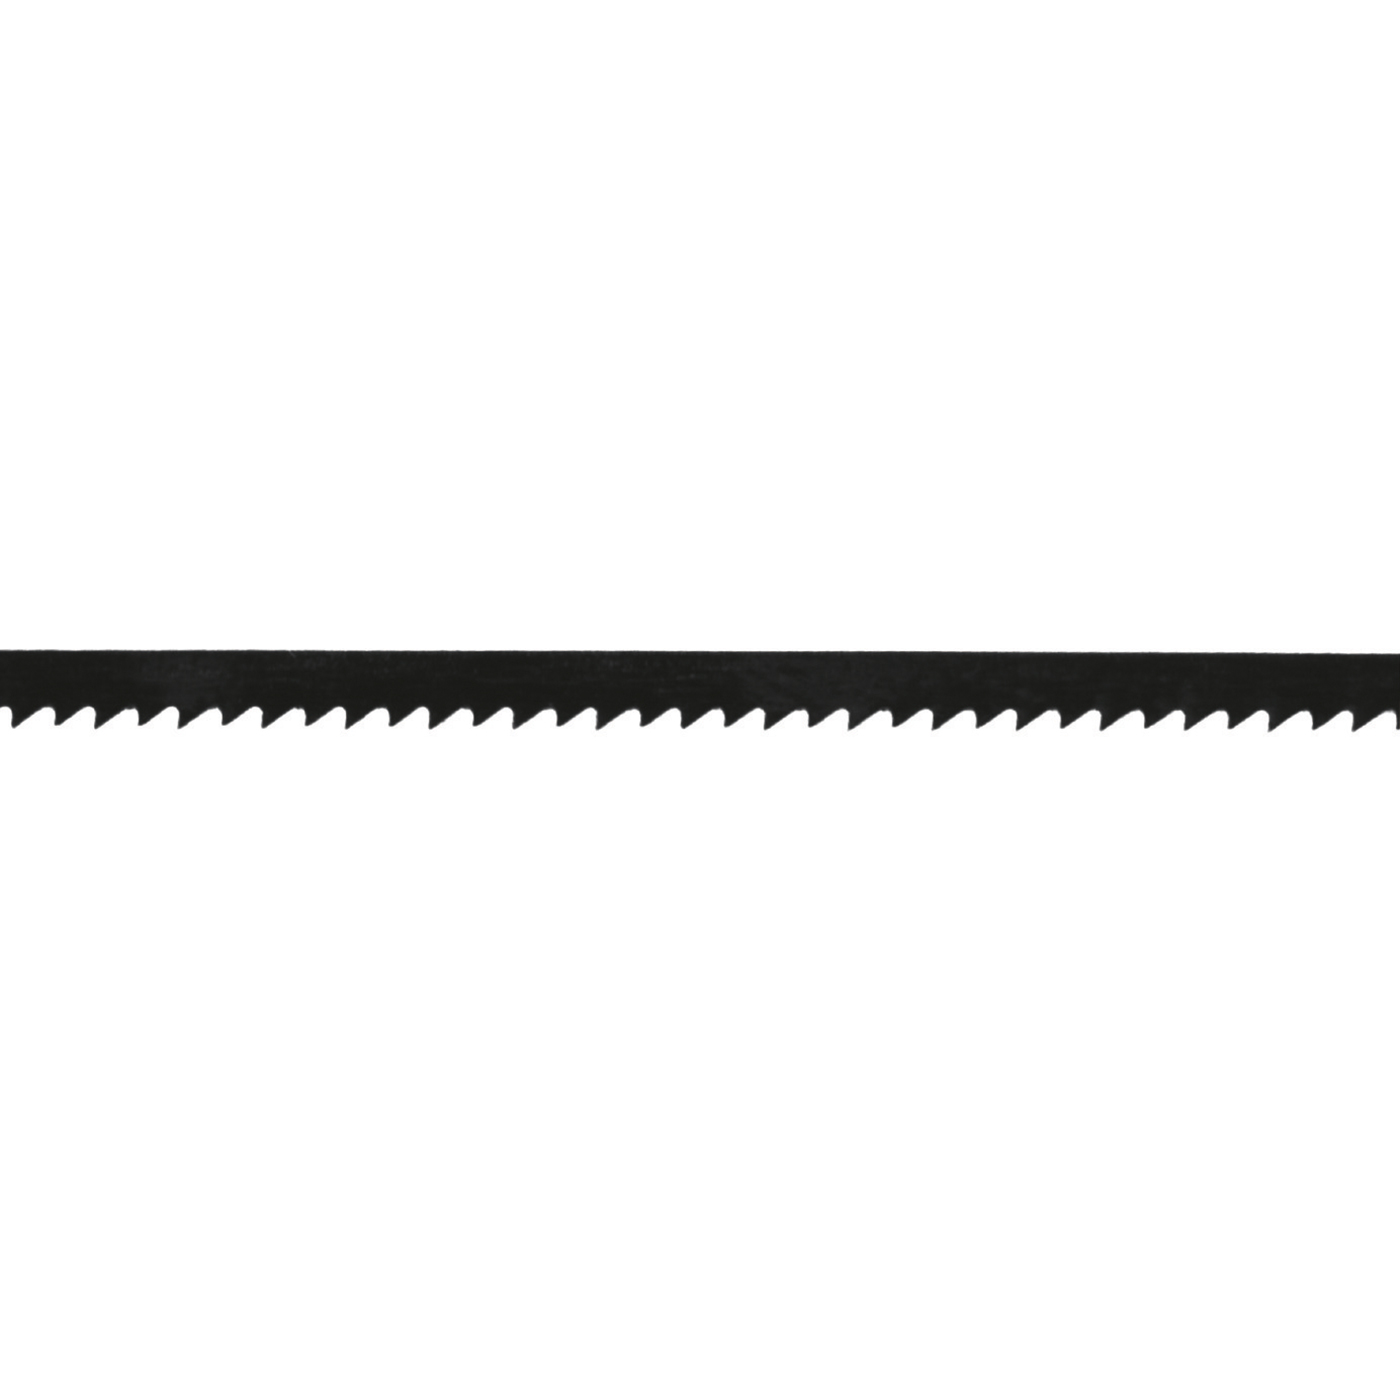 FINOBLADES Saw Blades, 3.00 x 0.12 x 75 mm - 12 pieces